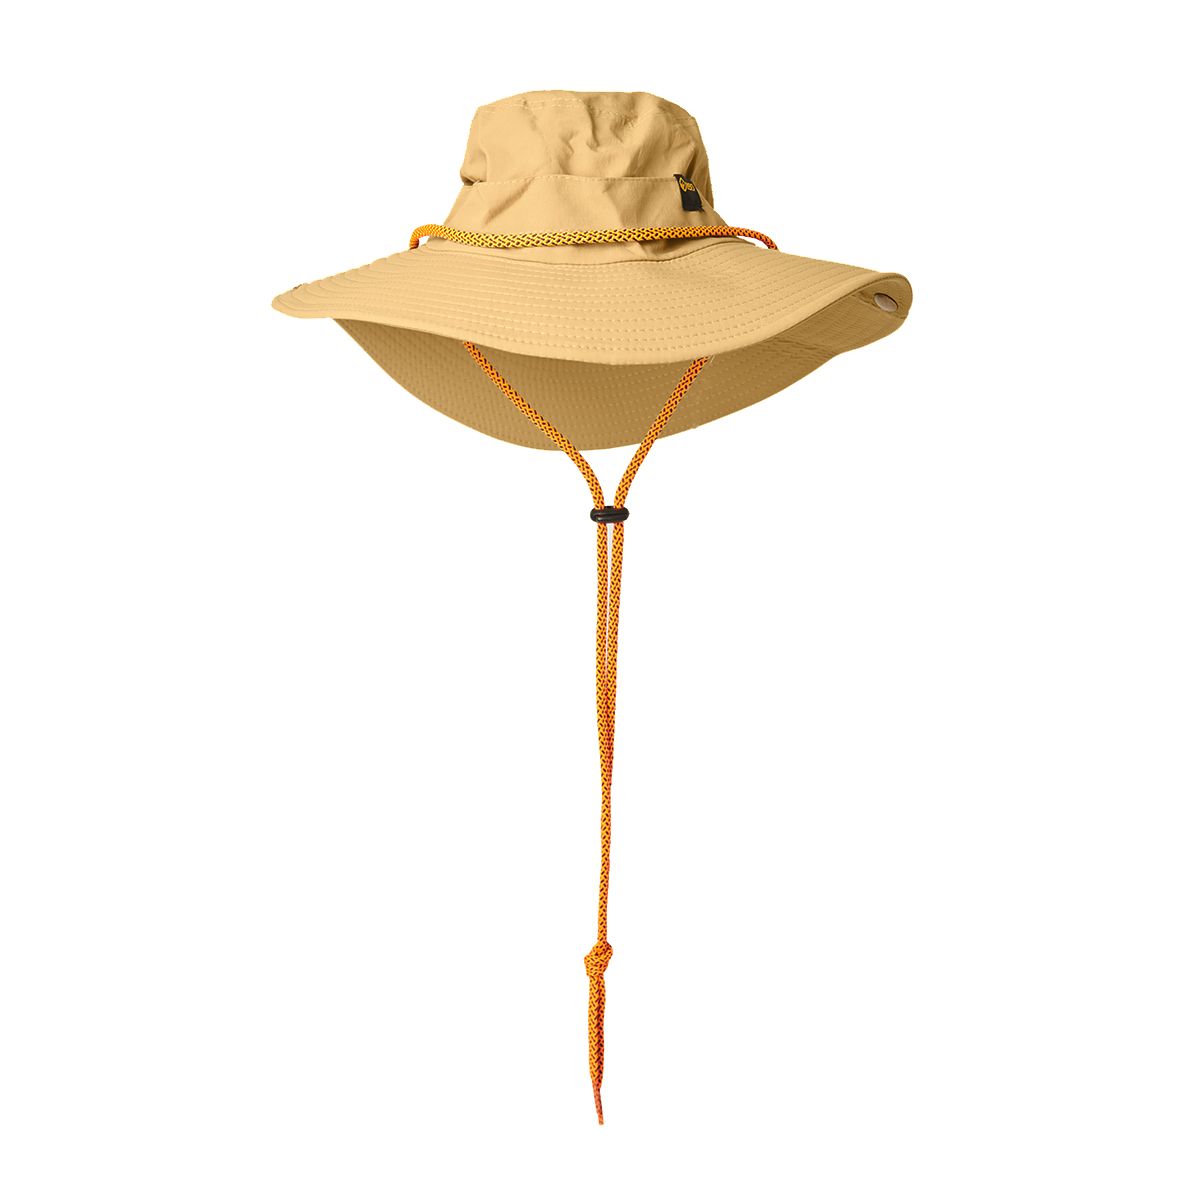 Libo Atacama Sombrero Australiano